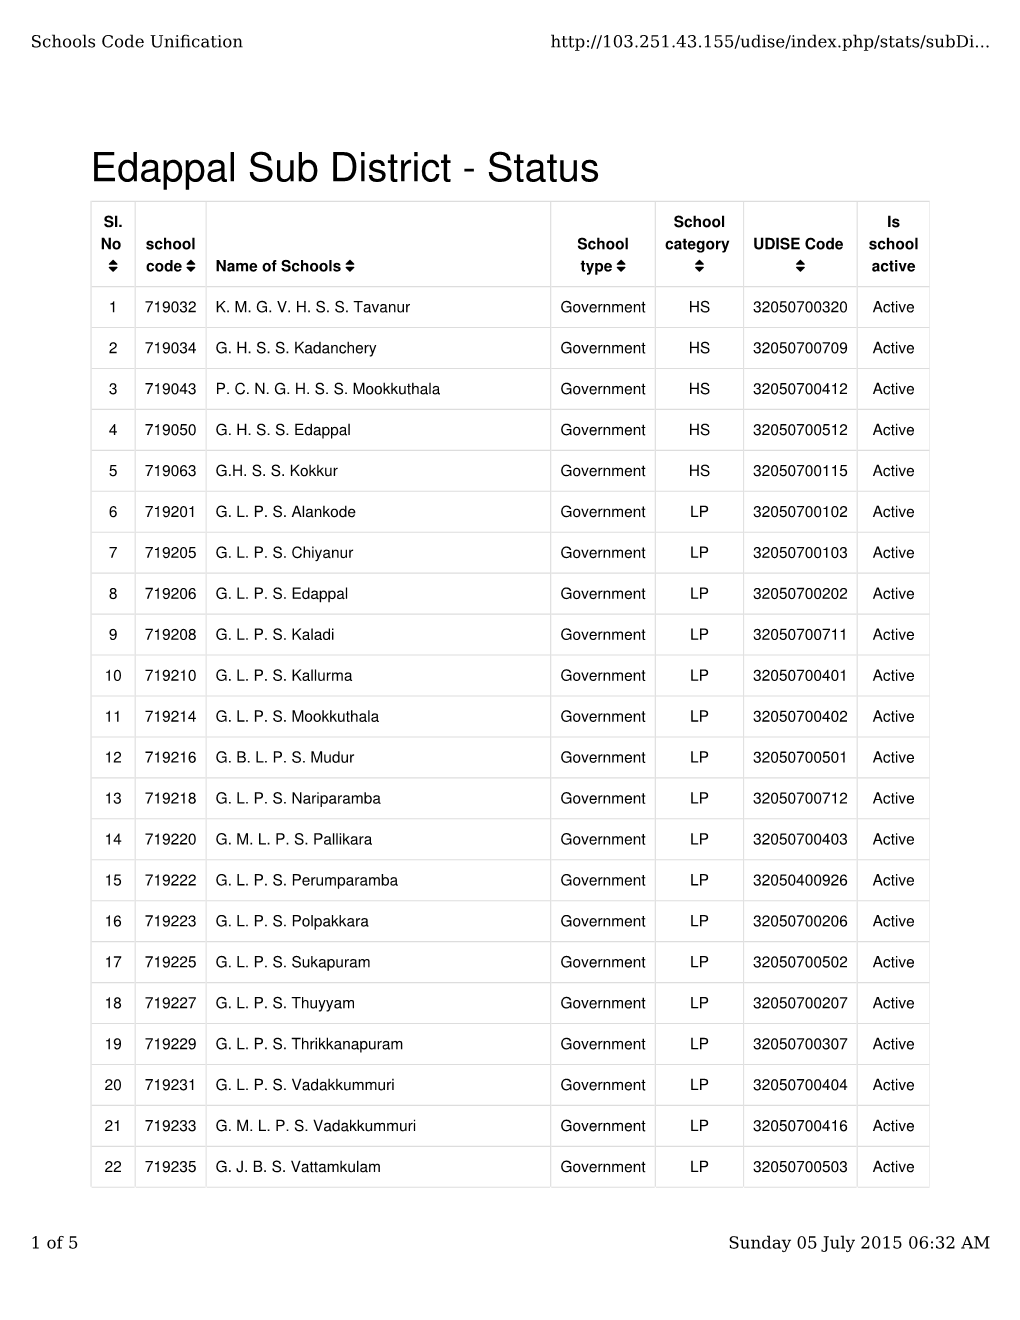 Edappal Sub District - Status